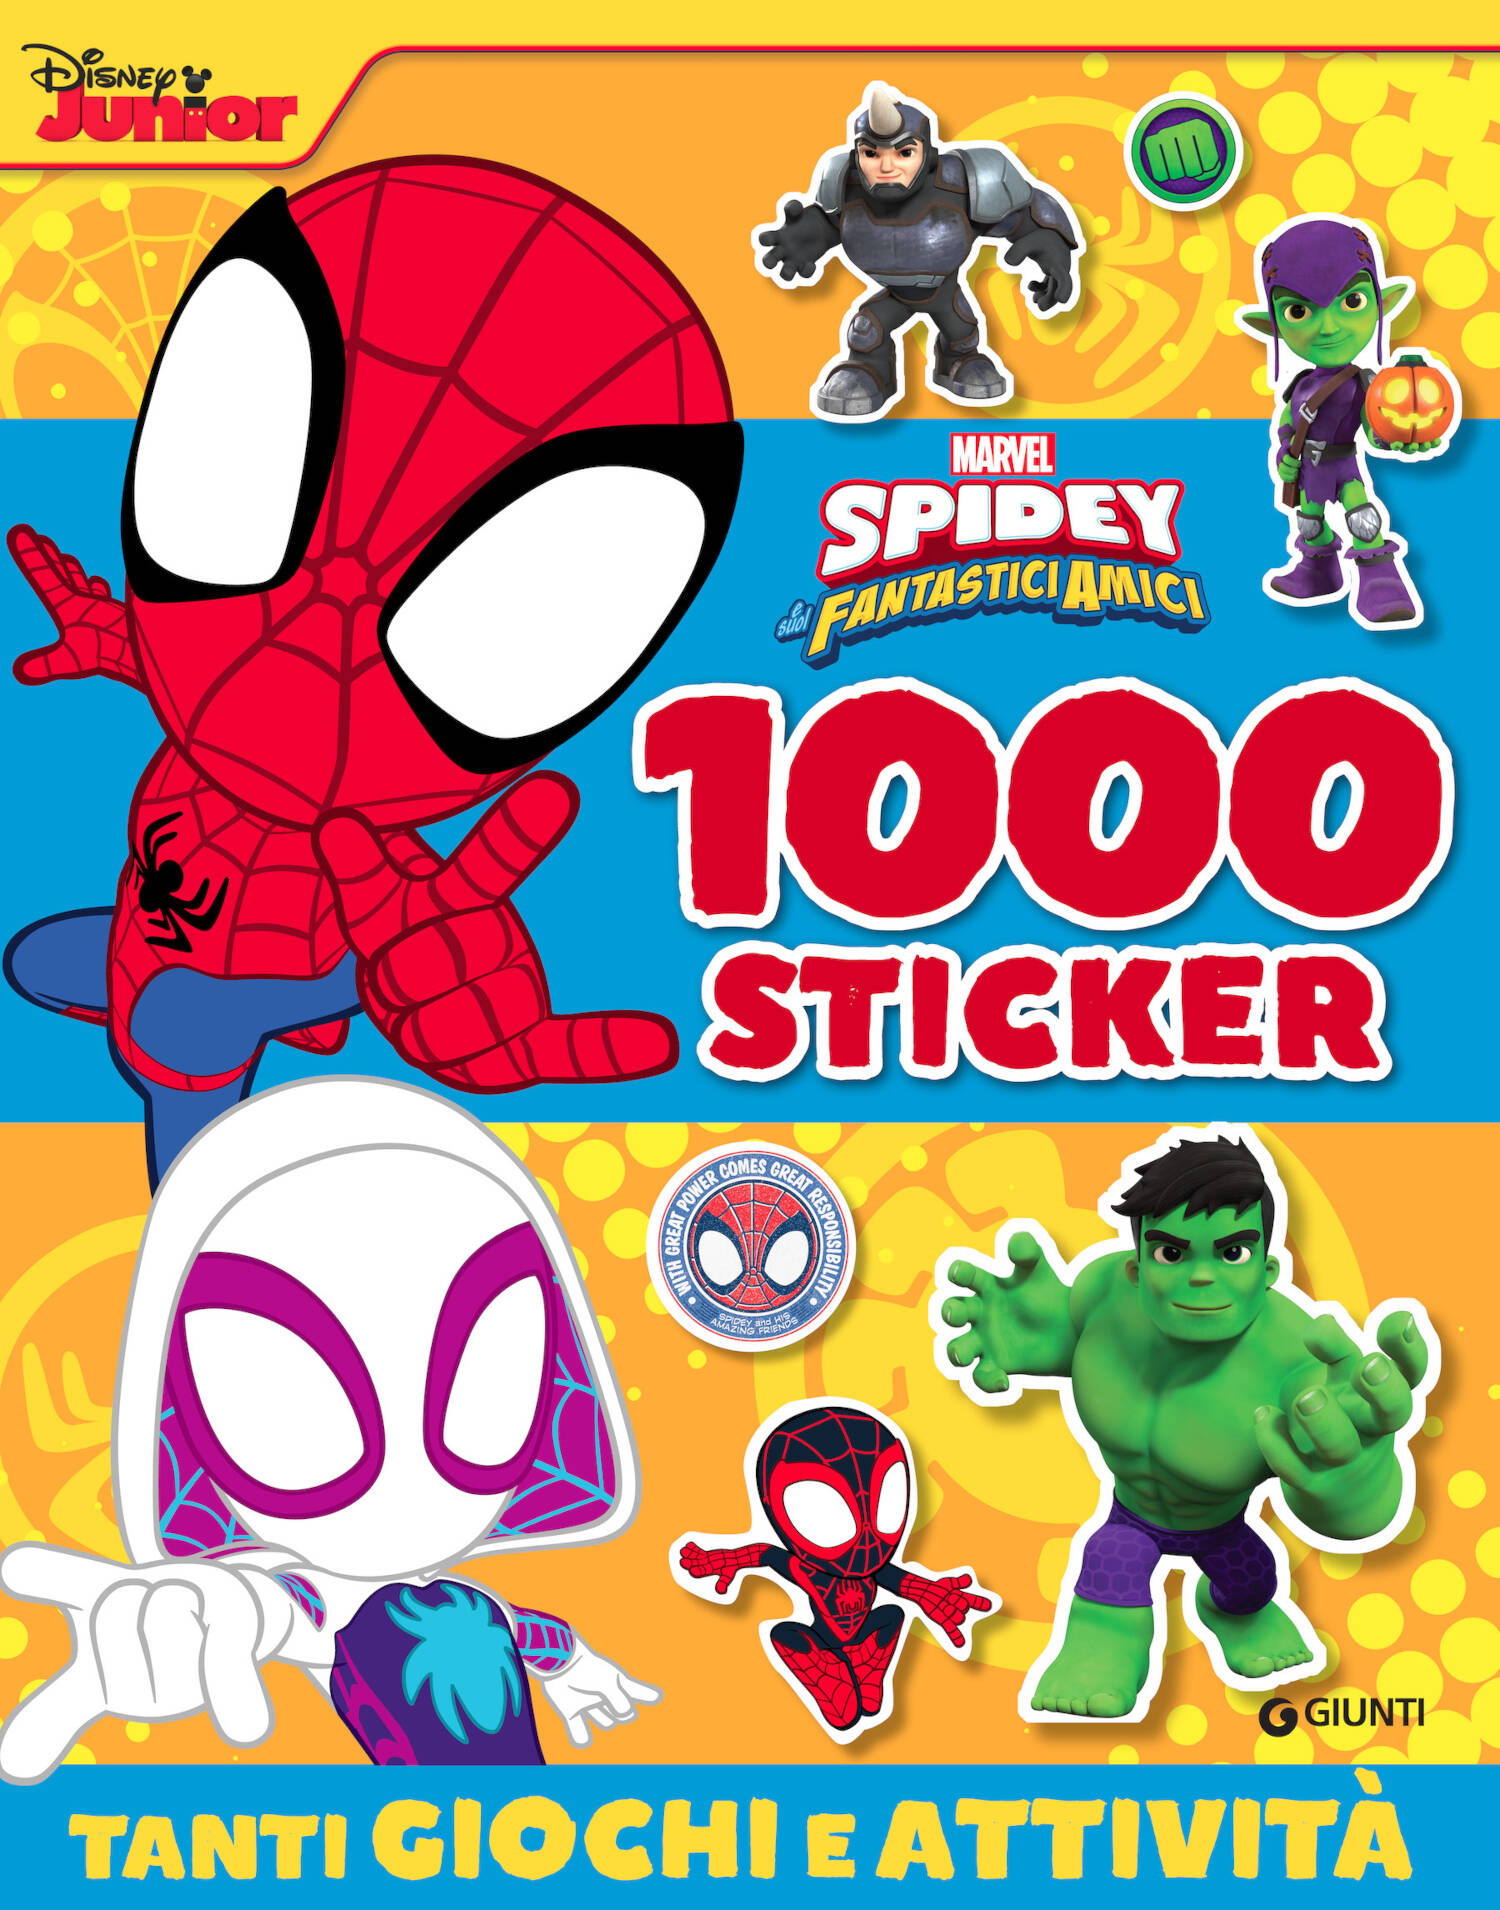 Spidey and his amazing friends 1000 Sticker